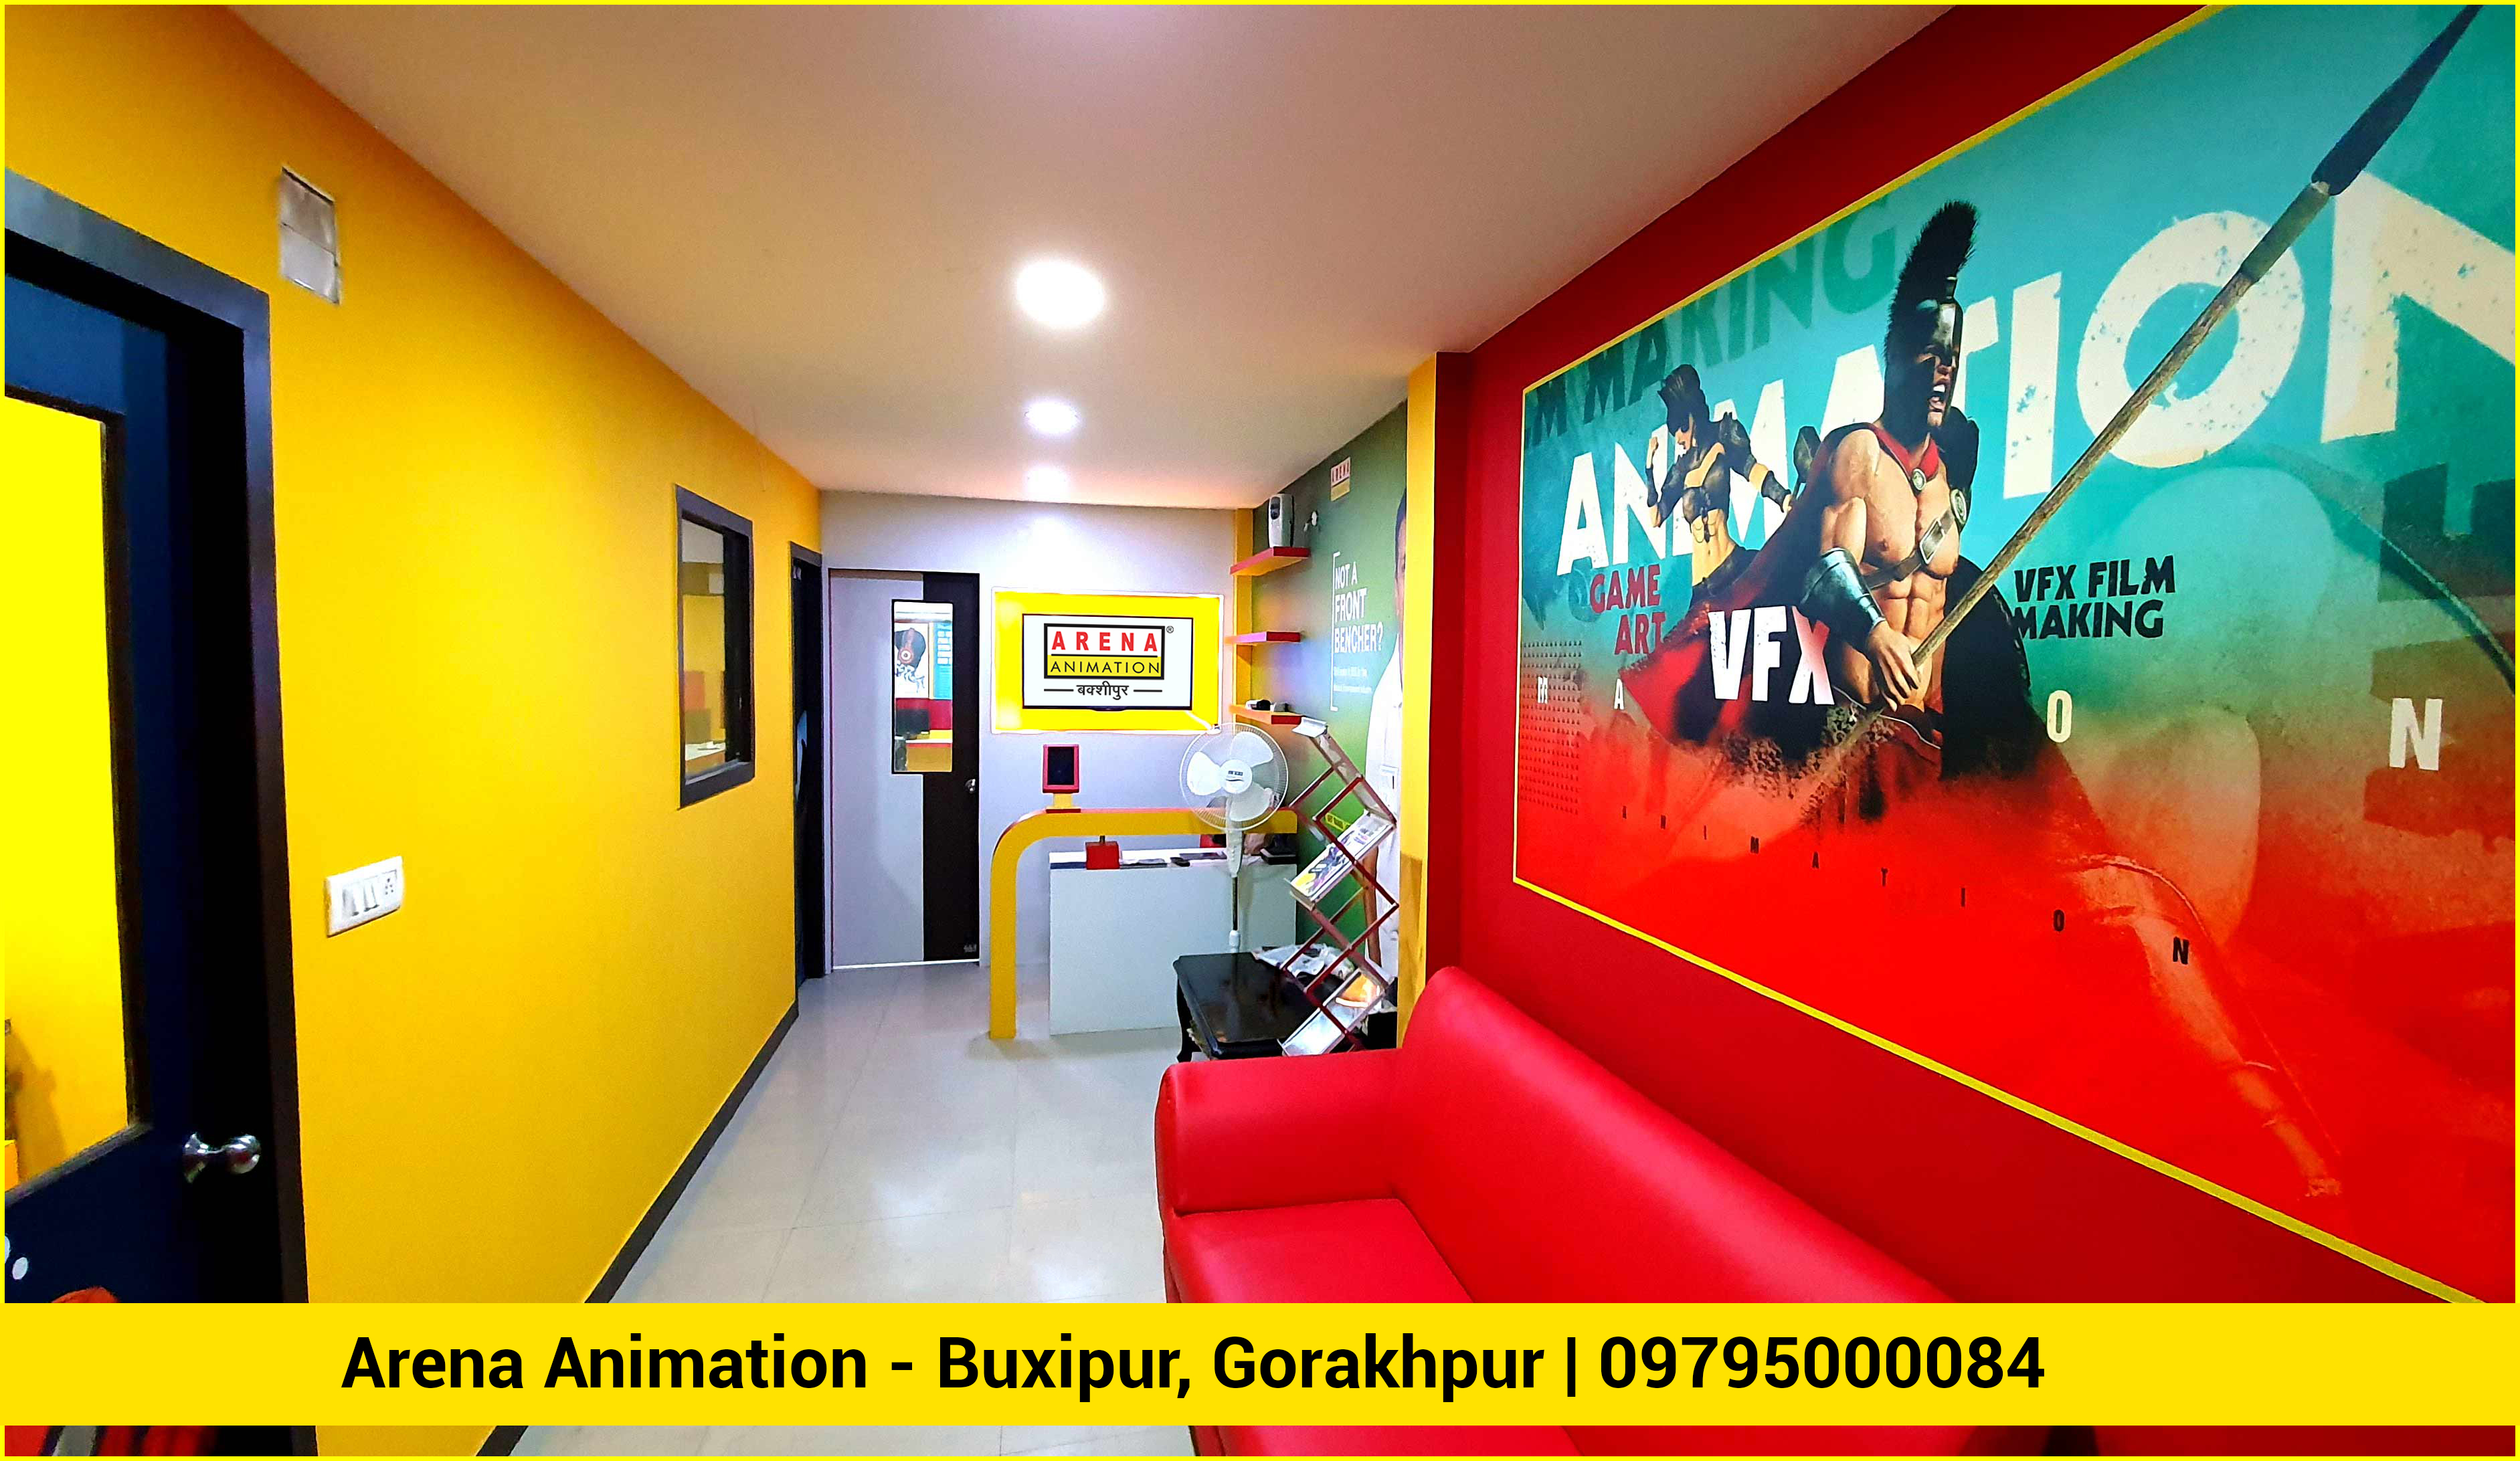 Arena Animation - Buxipur, Gorakhpur in Buxipur, Gorakhpur-273001 | Sulekha  Gorakhpur